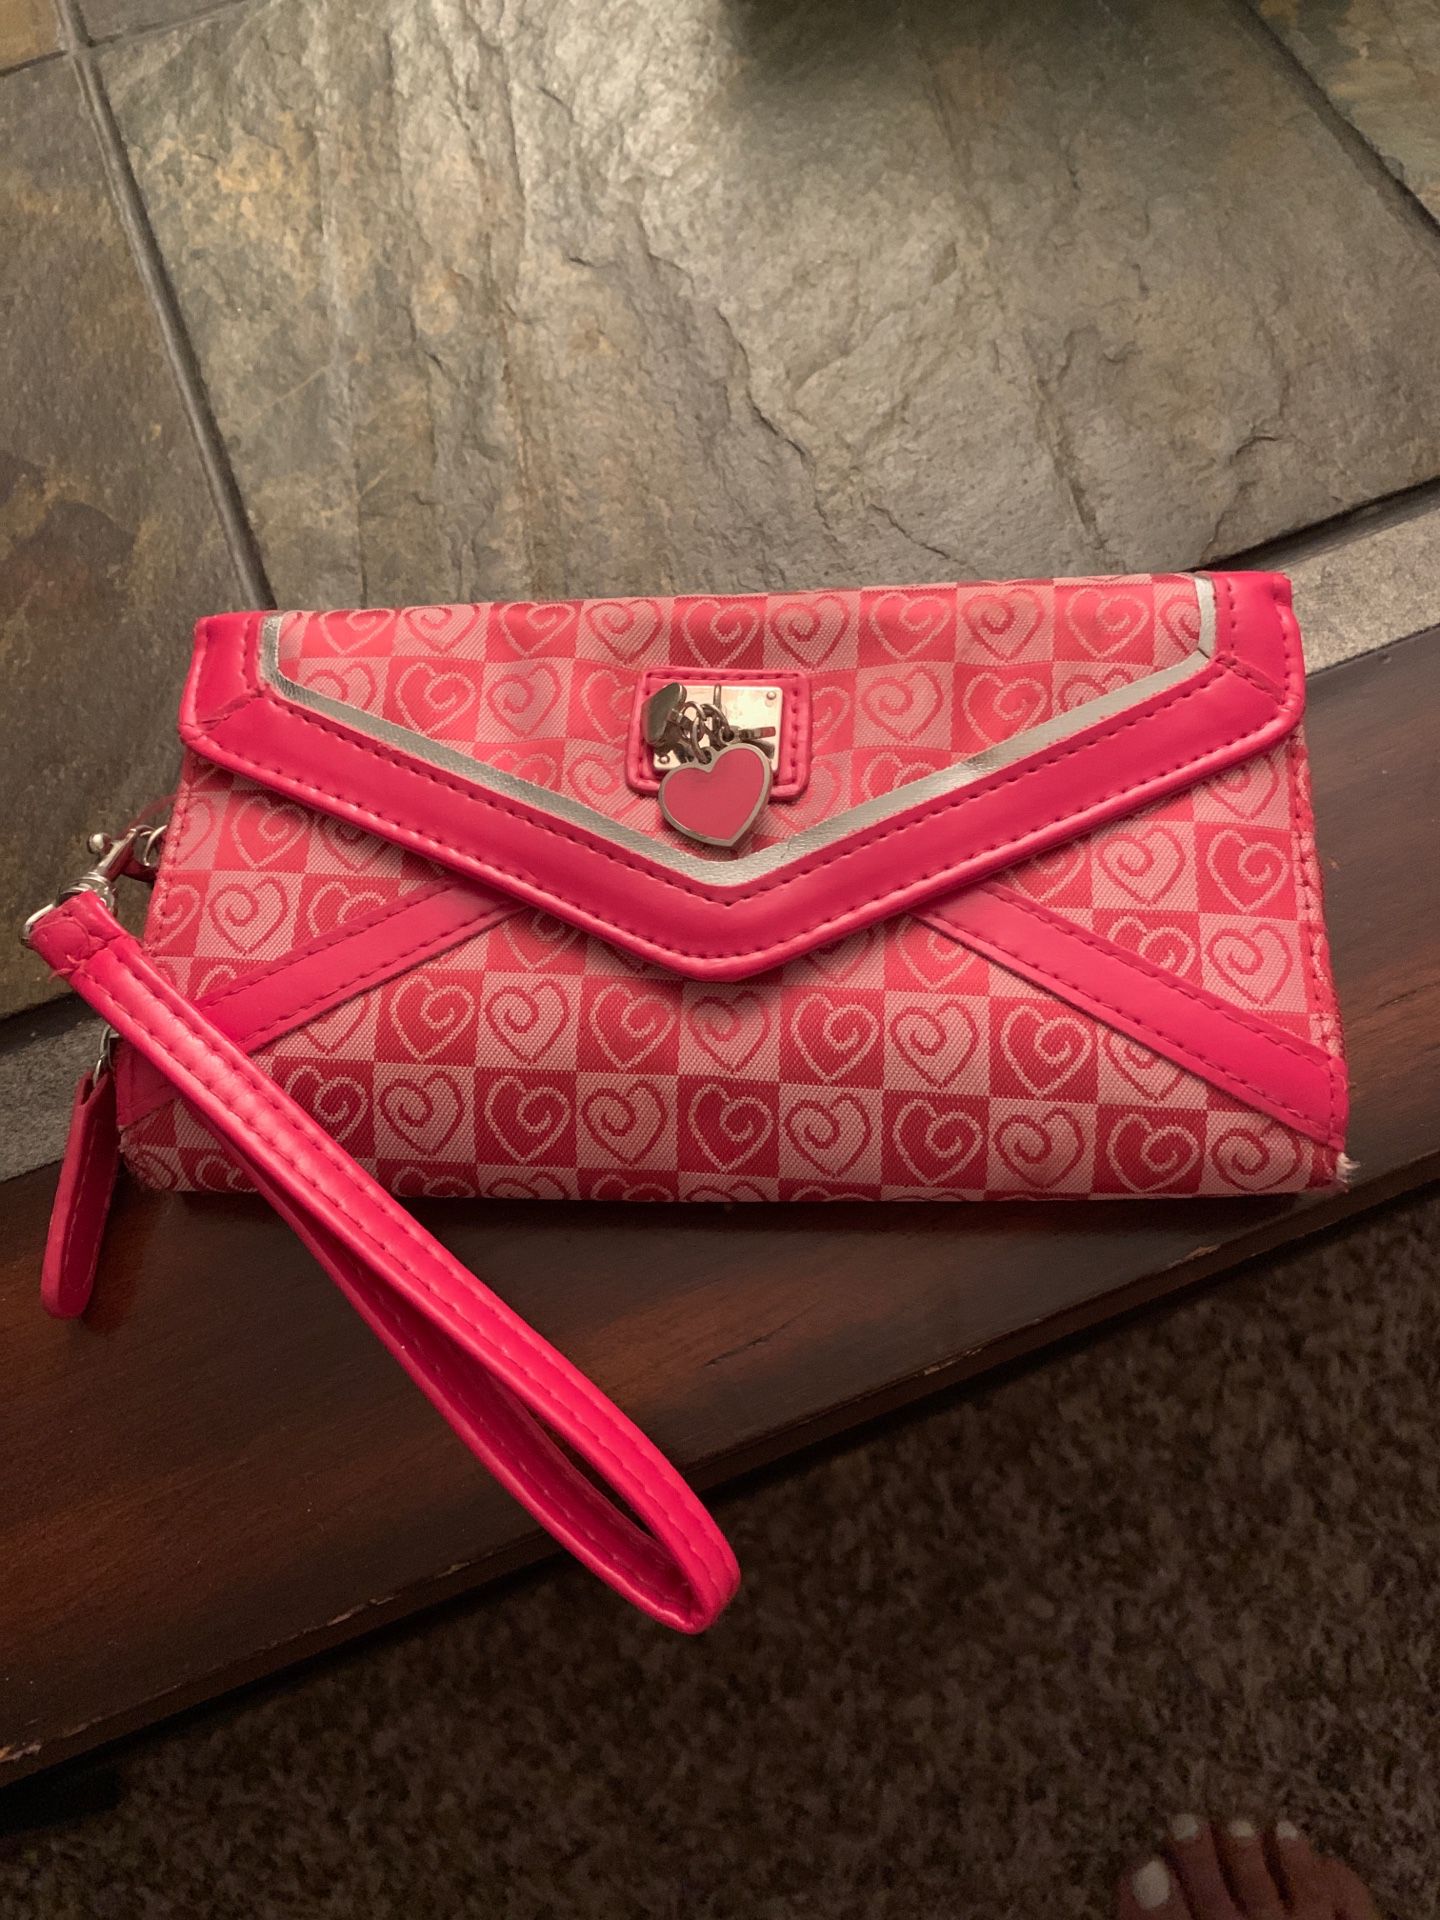 Pink wallet clutch